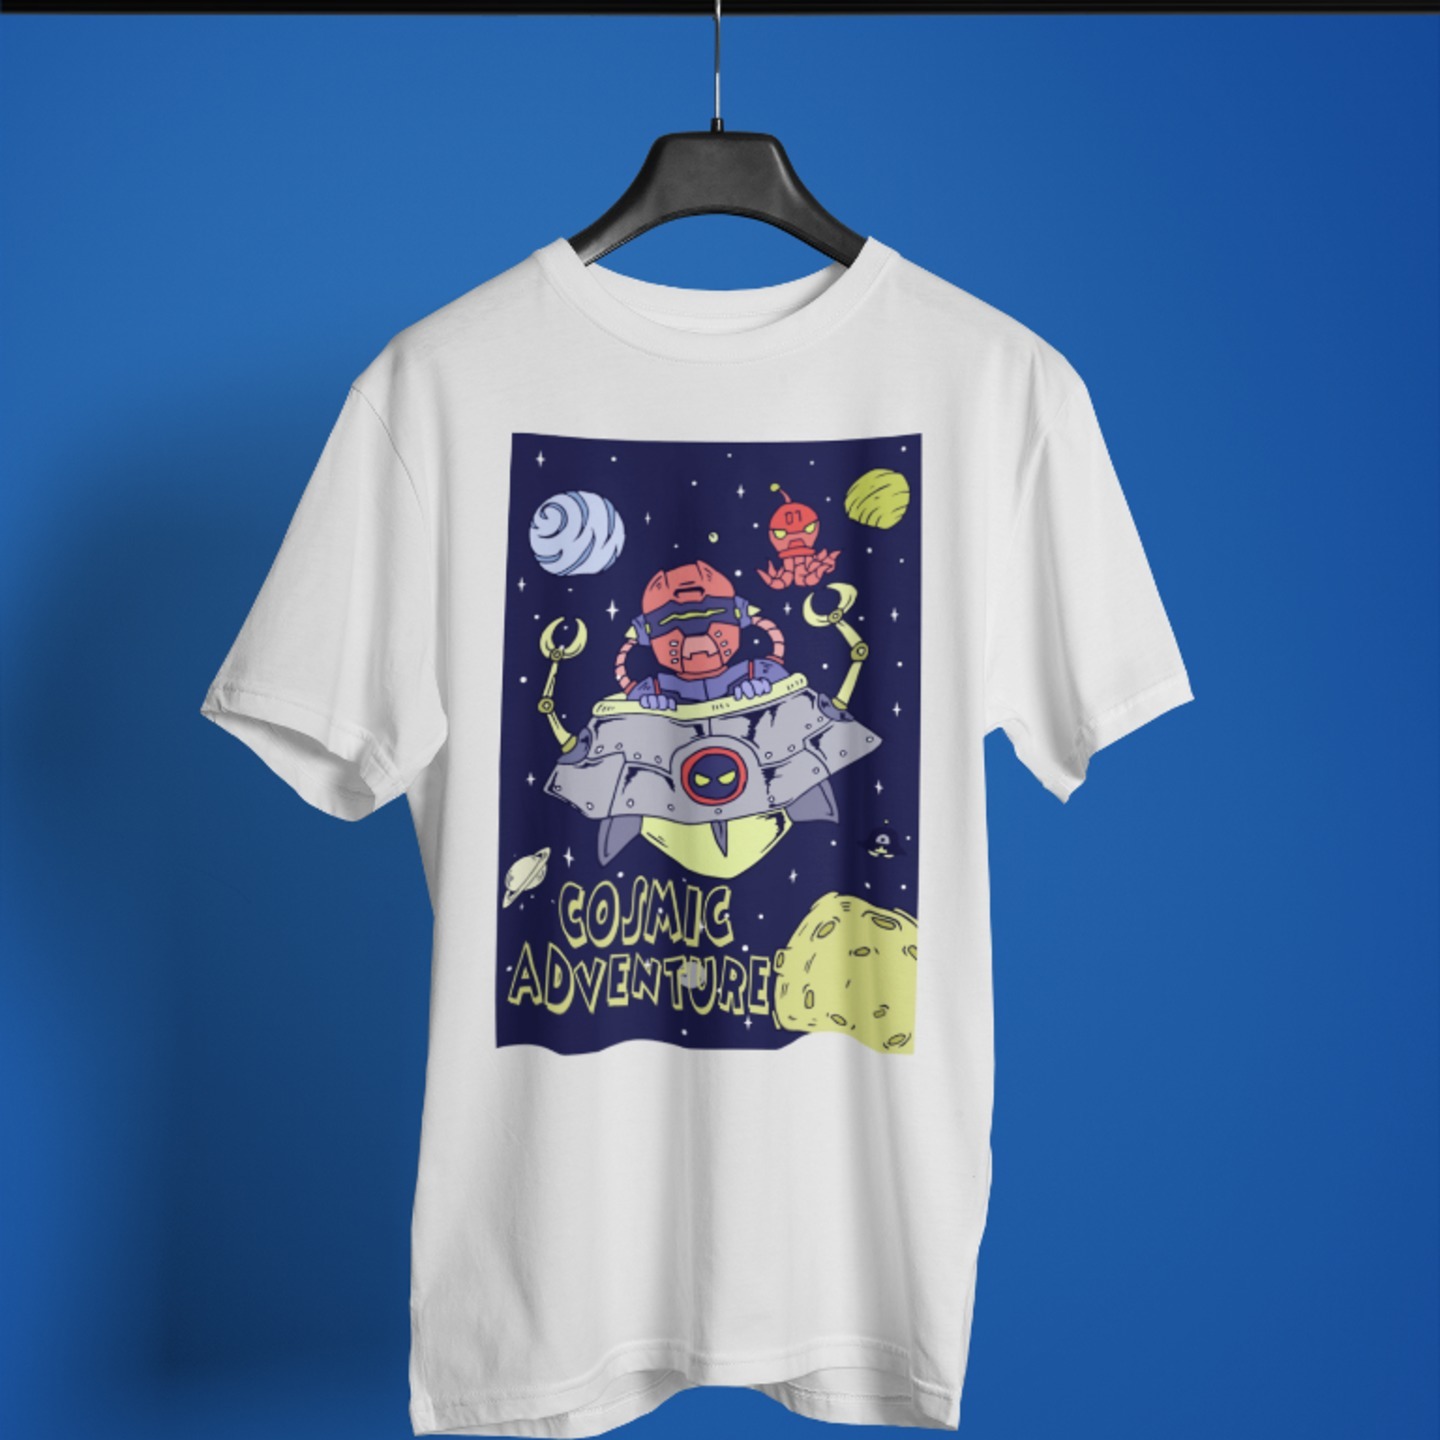 Cosmic Adventure Printed Tshirt